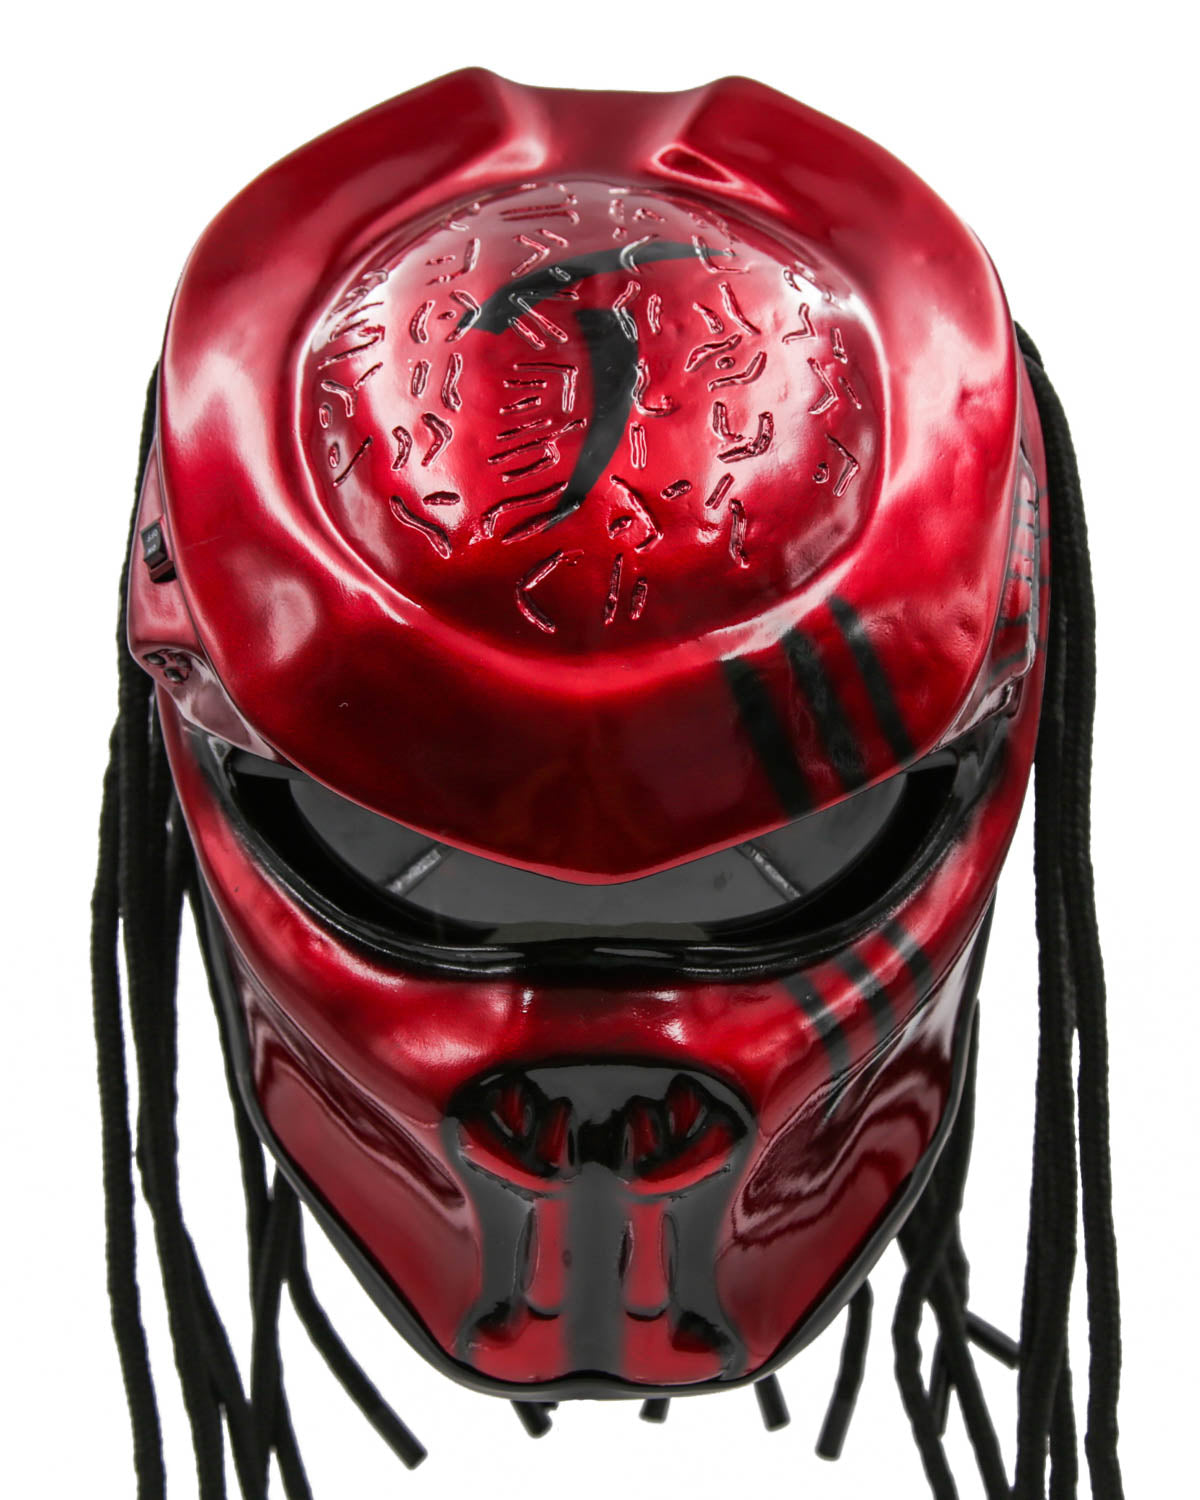 Predator Helmets Dot Approved